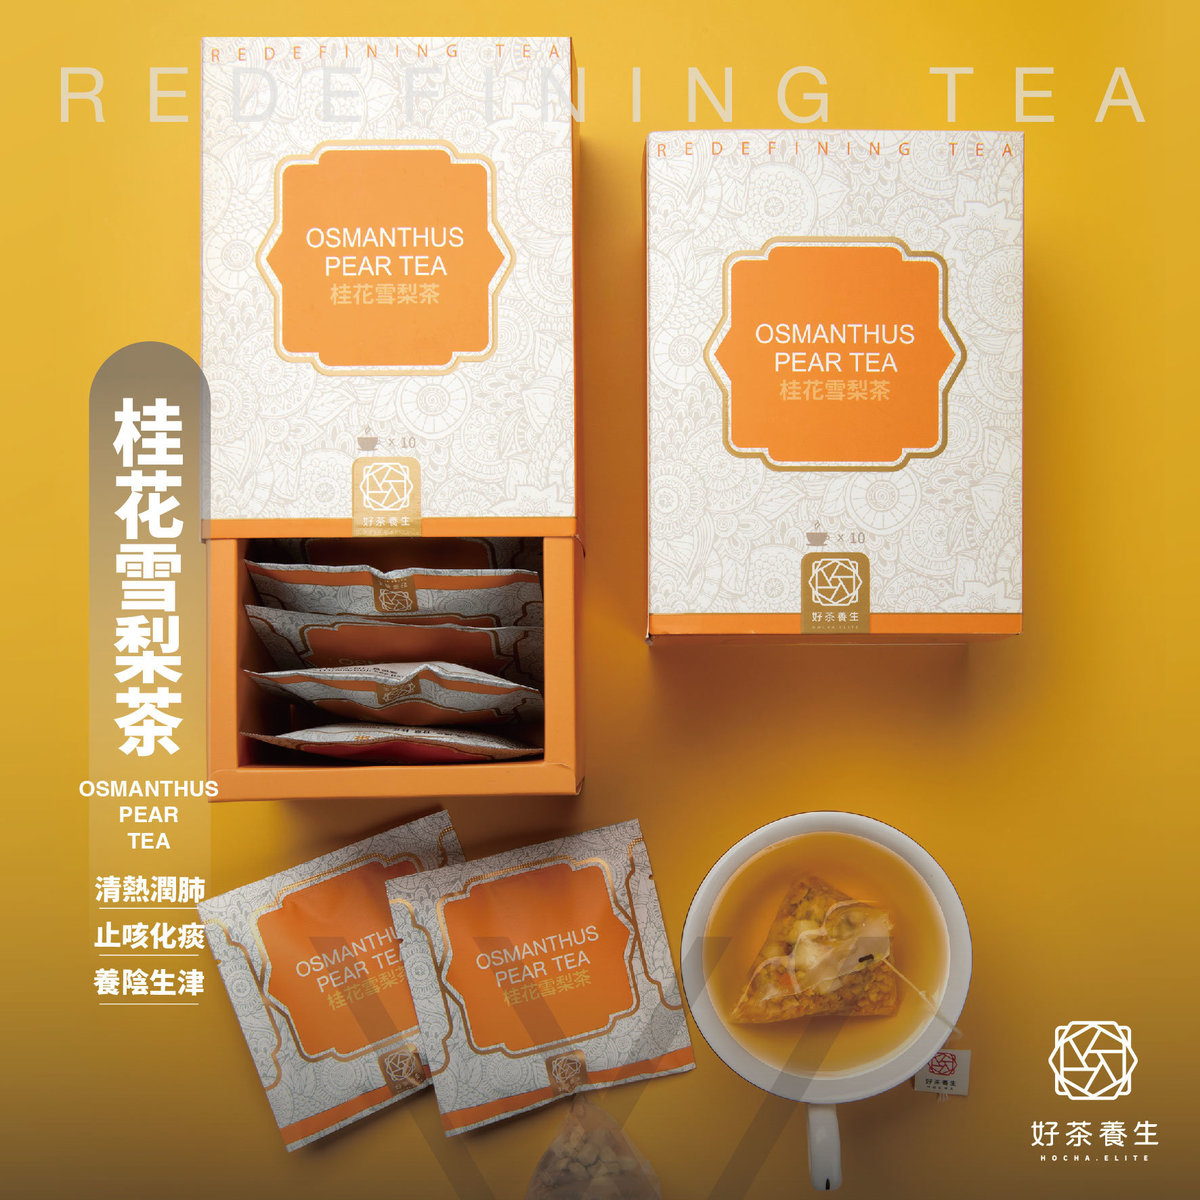 OSMANTHUS PEAR TEA(Box Set - temple tea bag) #2189